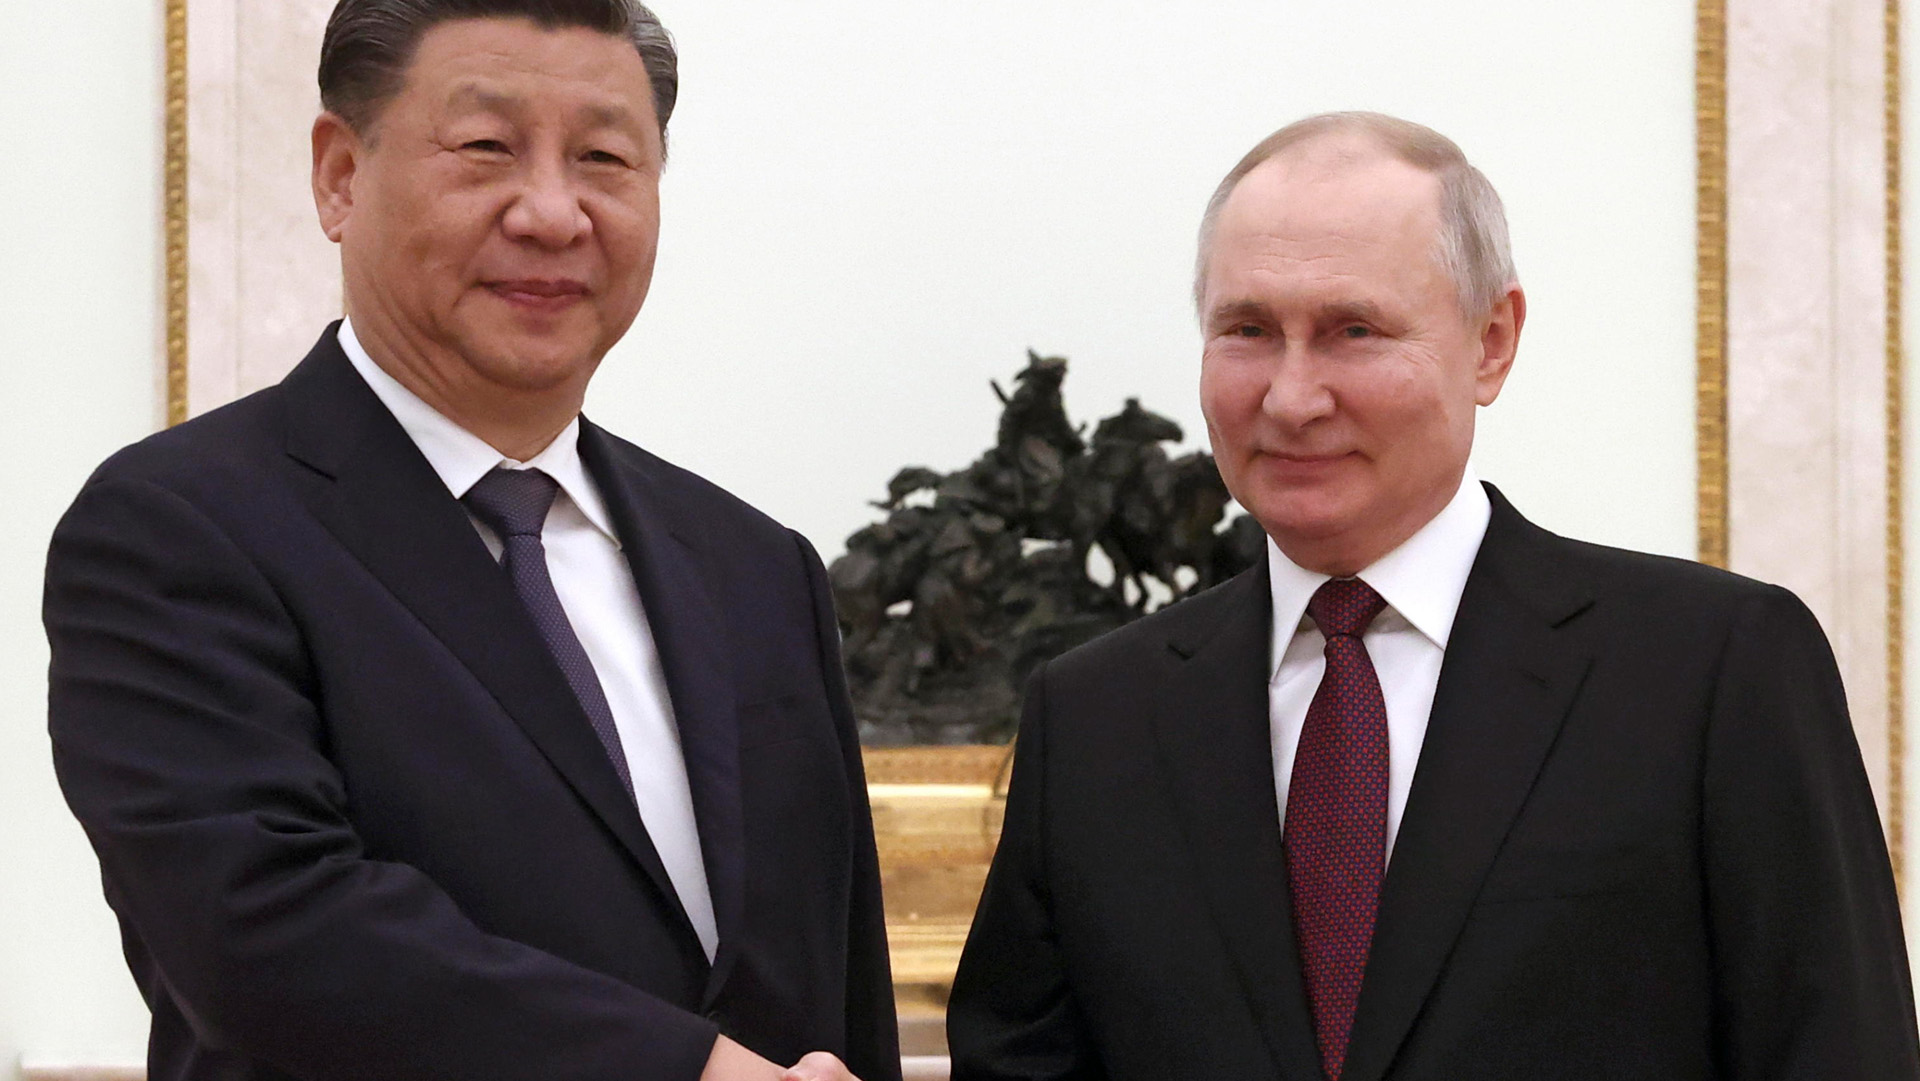 Il vertice tra Putin e Xi Jinping per rafforzare la partnership tra i due paesi